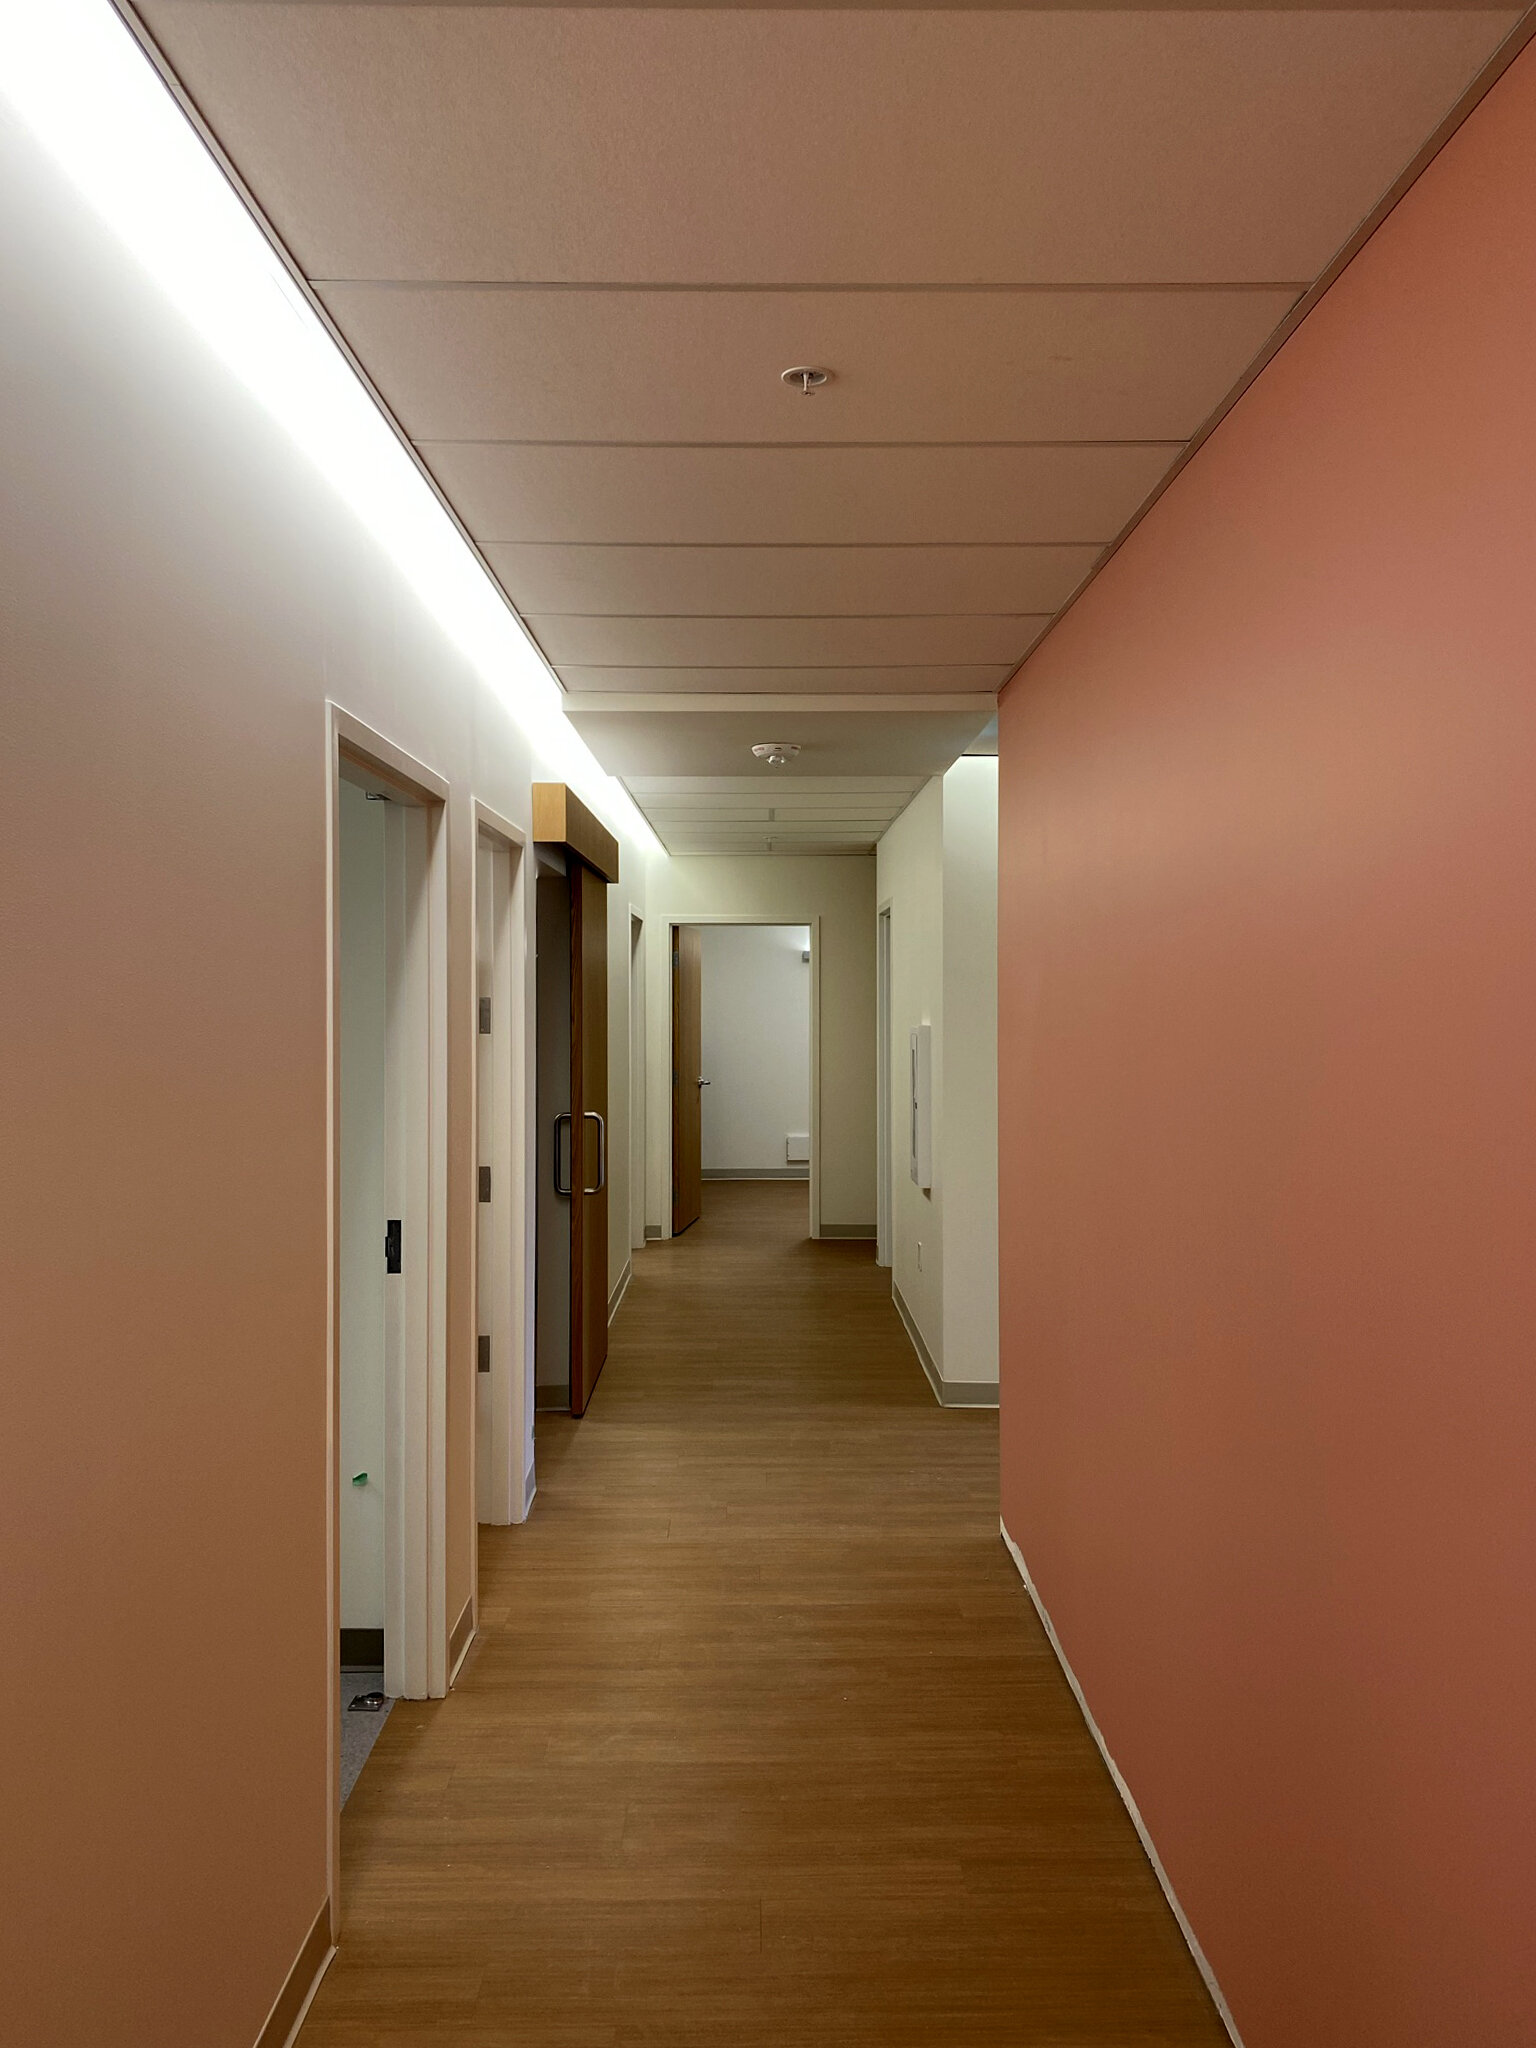 02 Corridors.JPEG